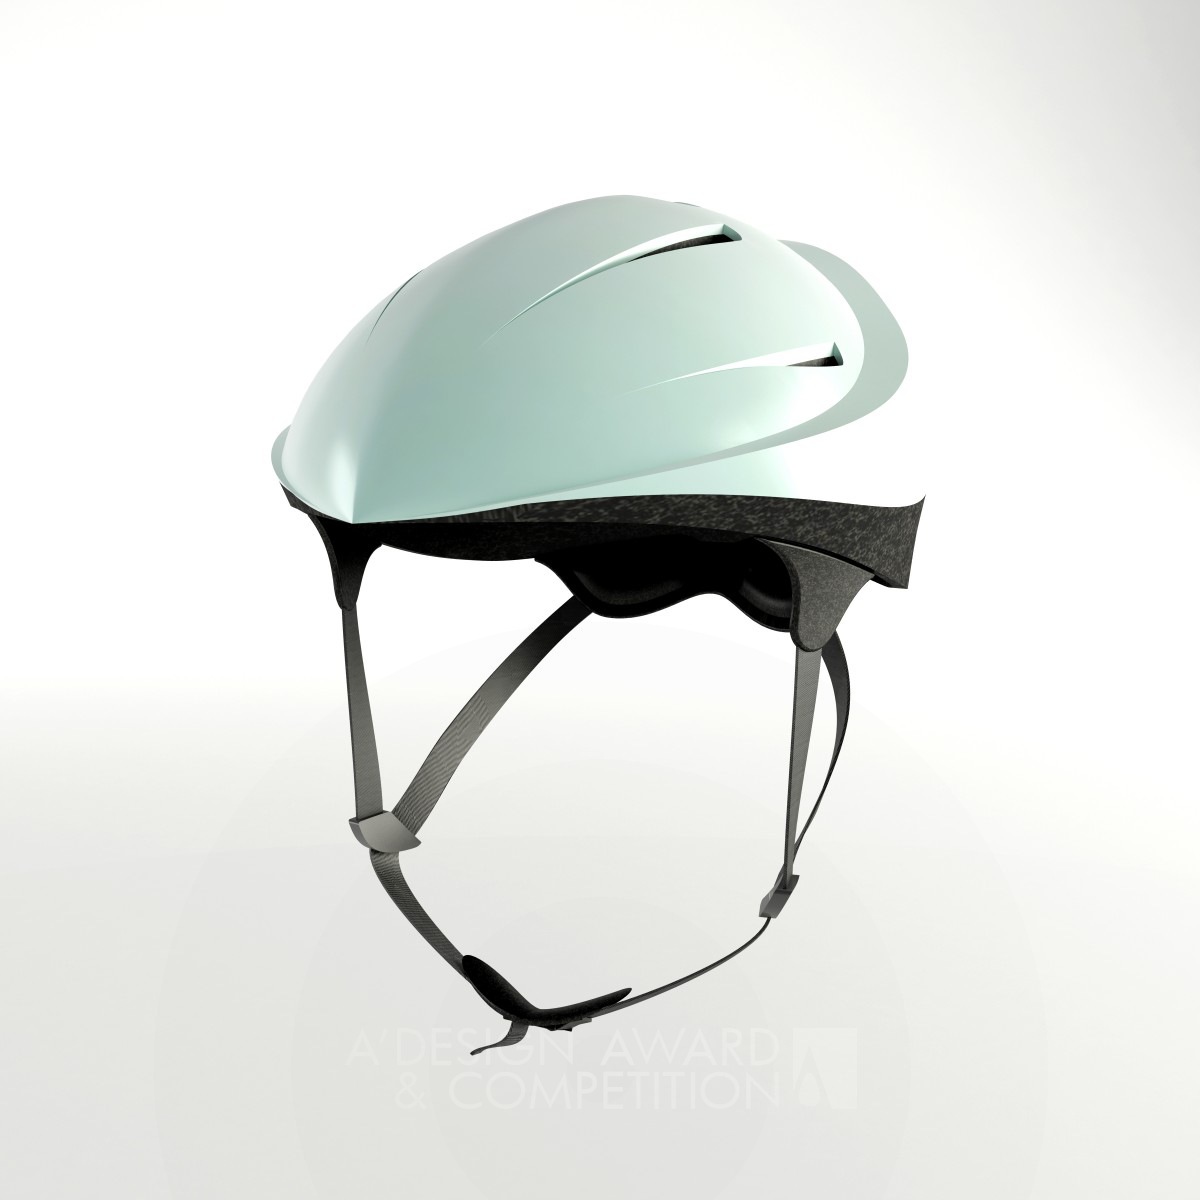 Safety's First Biking Helmet by Koray Hisarlı